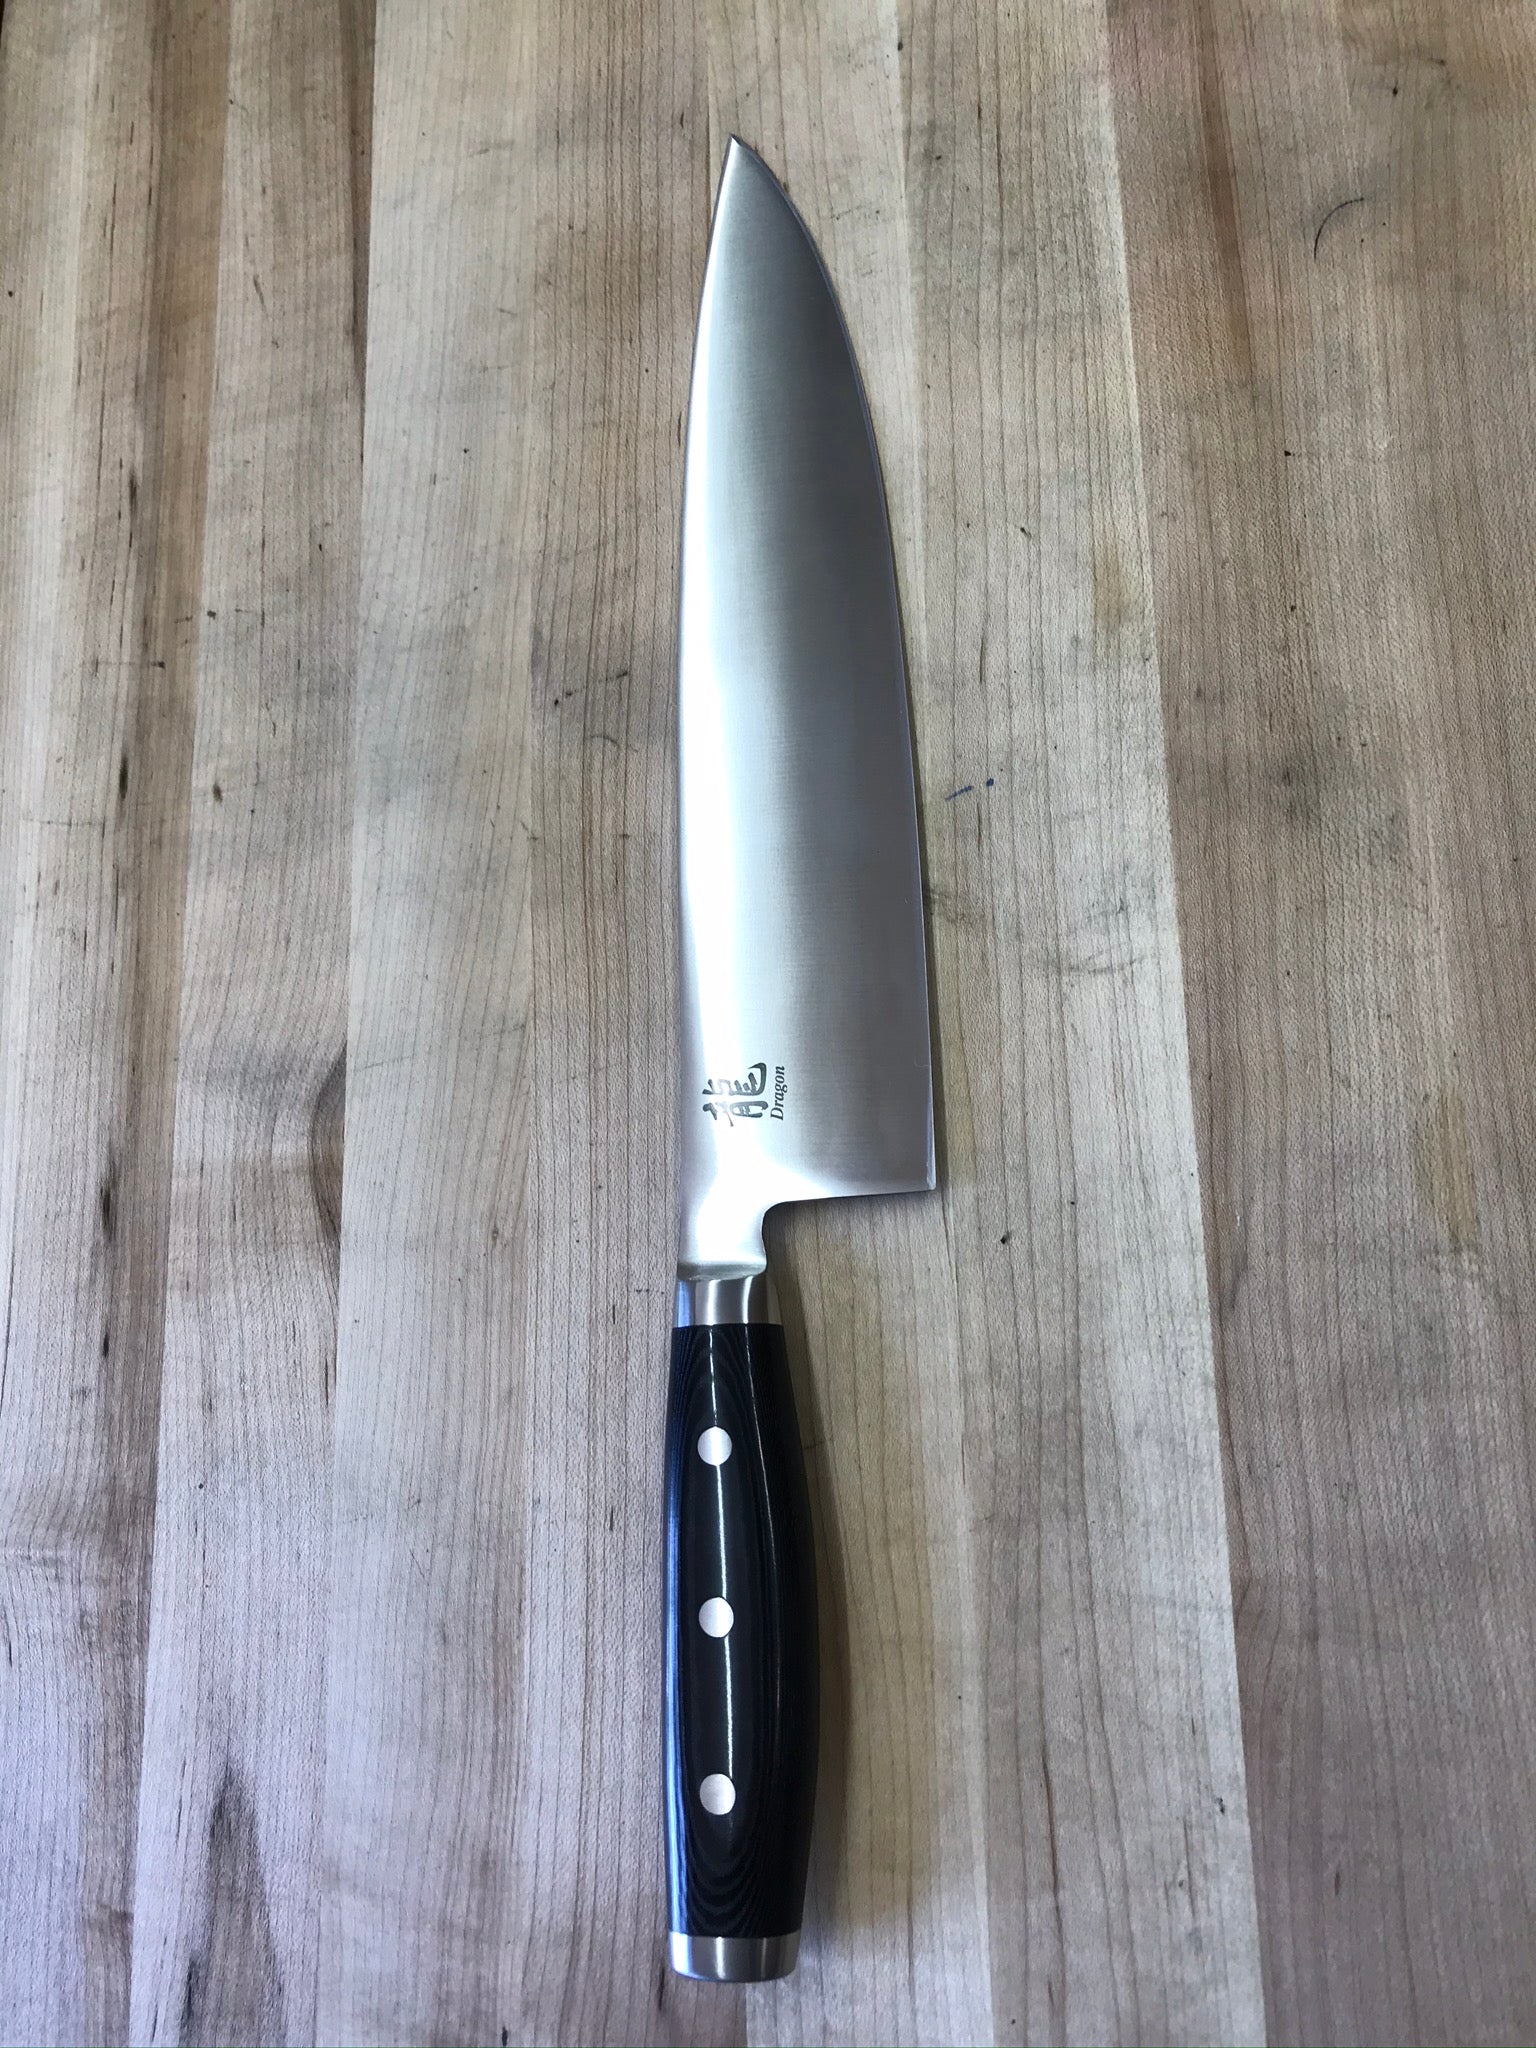 Dragon Classic 10" Chef's Knife